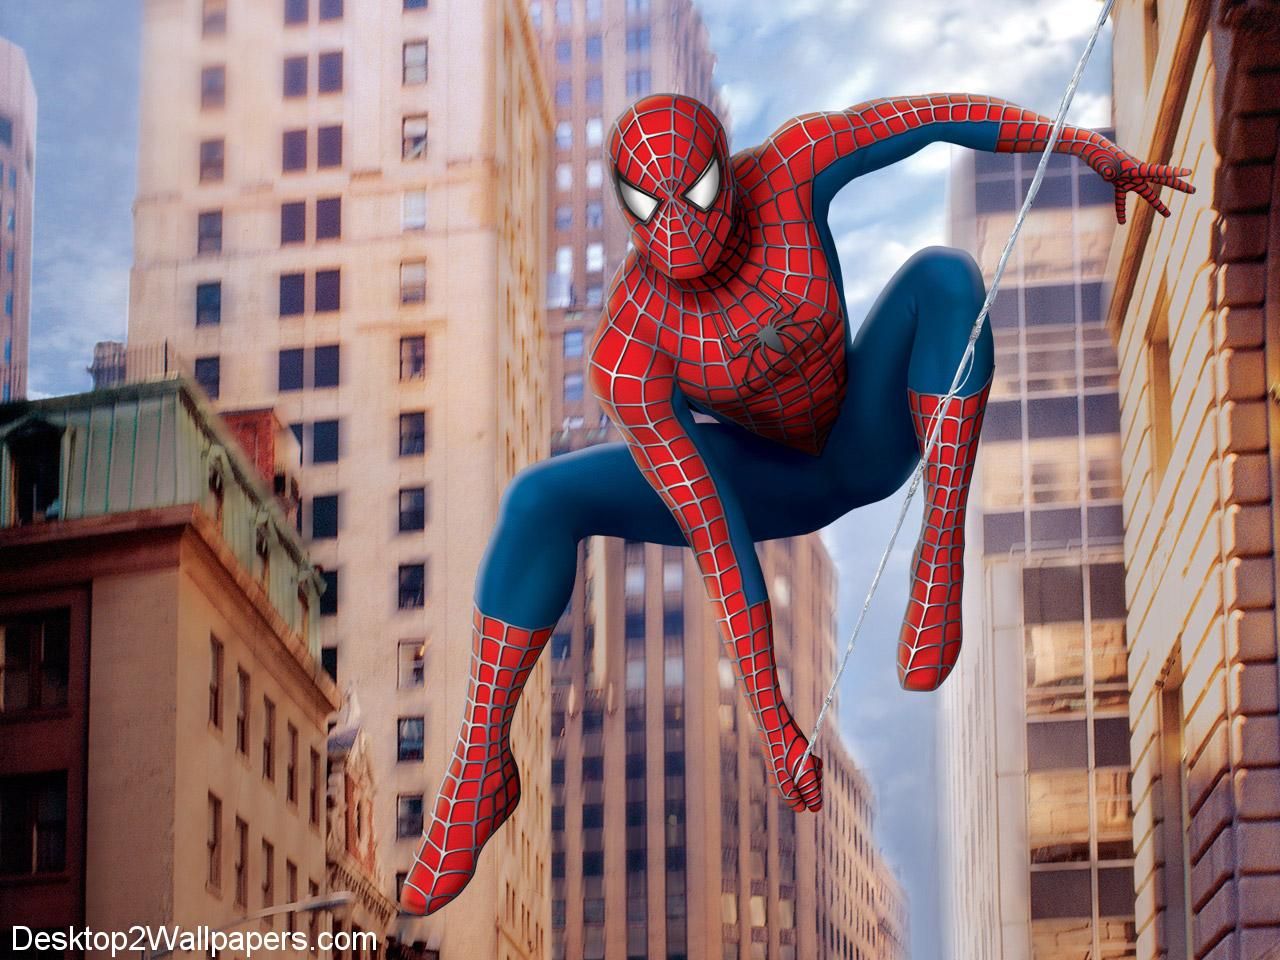 spiderman. Spider Man 2 wallpaper Movies HD Desktop Wallpaper at. Spiderman cartoon, Spiderman, Spider man trilogy